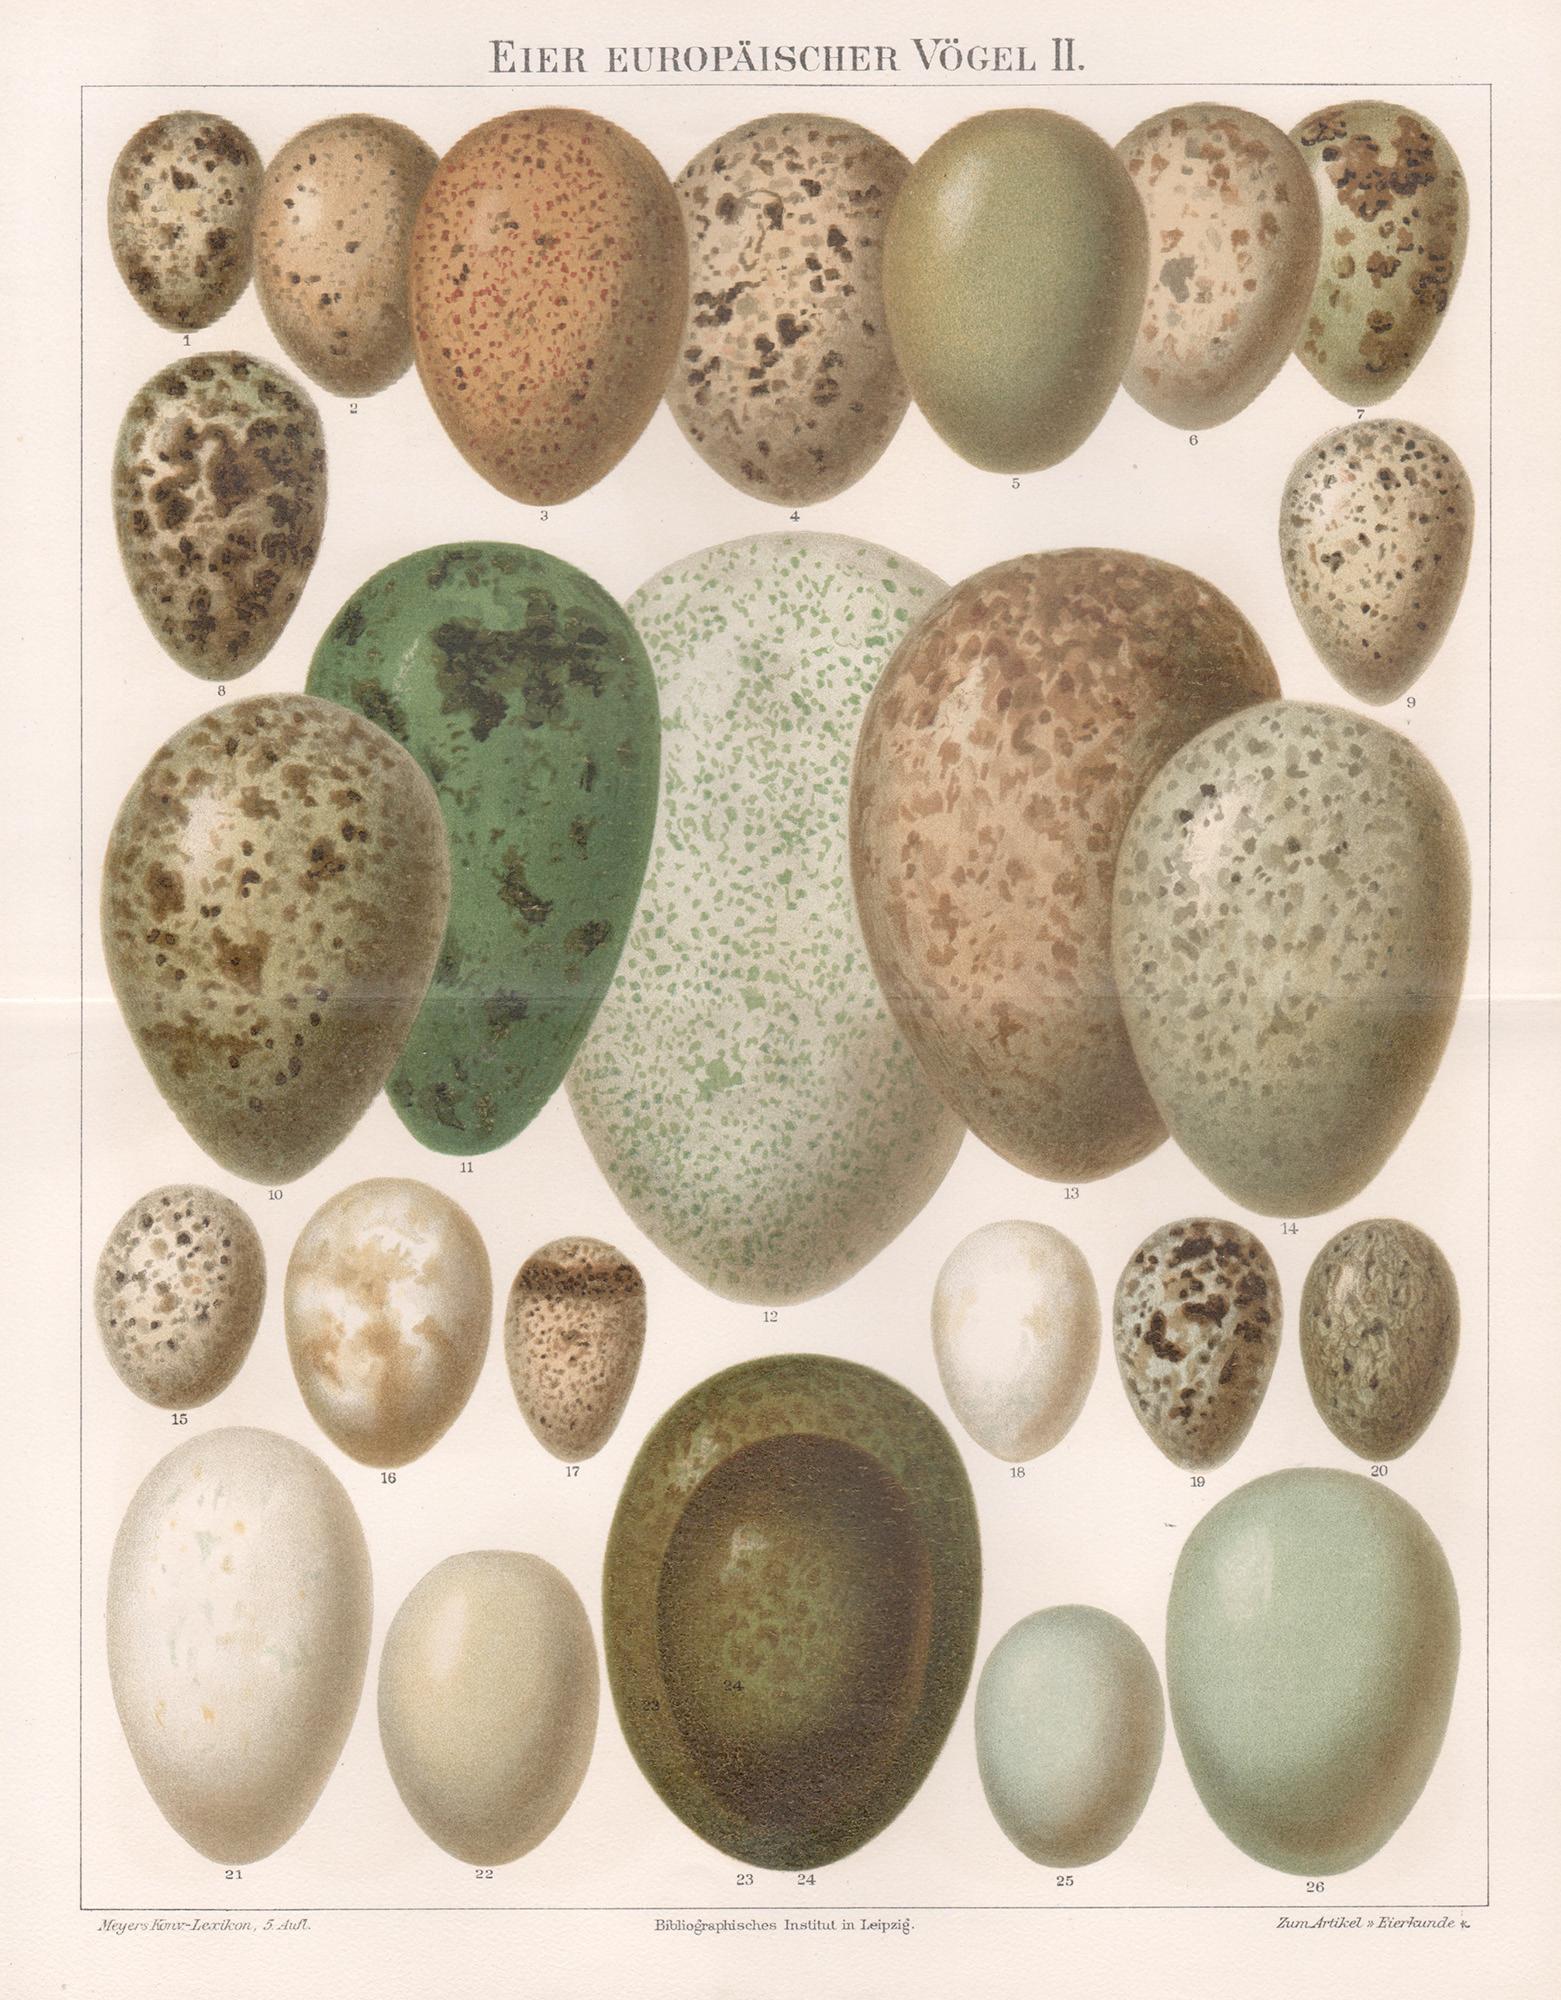 Unknown Print - European bird eggs, German antique chromolithograph print